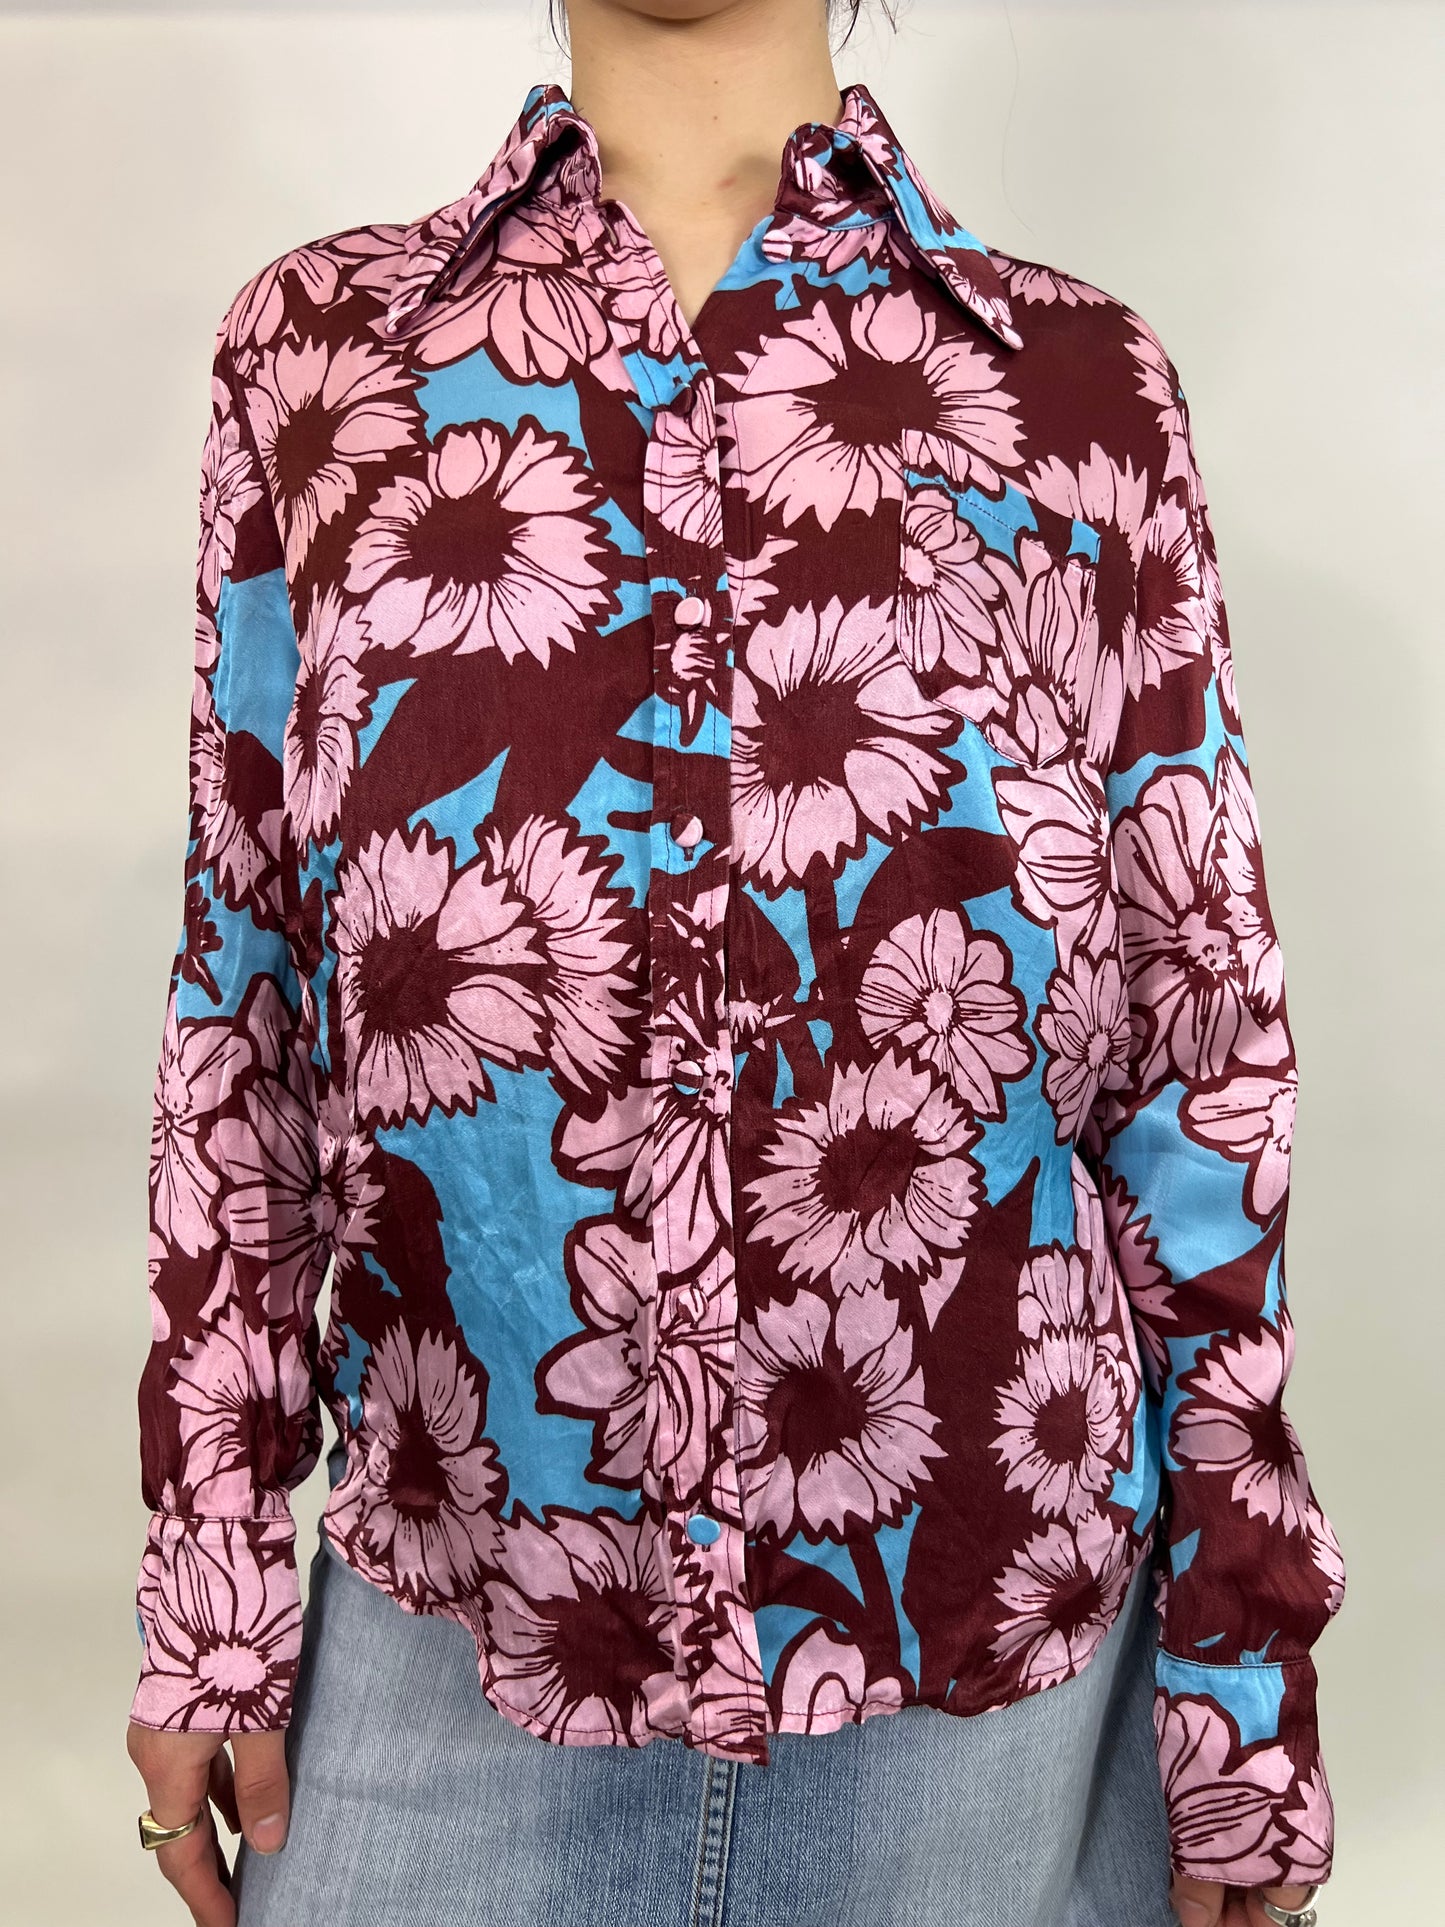 Baby Pink/Burgundy/Blue Floral Print Shirt